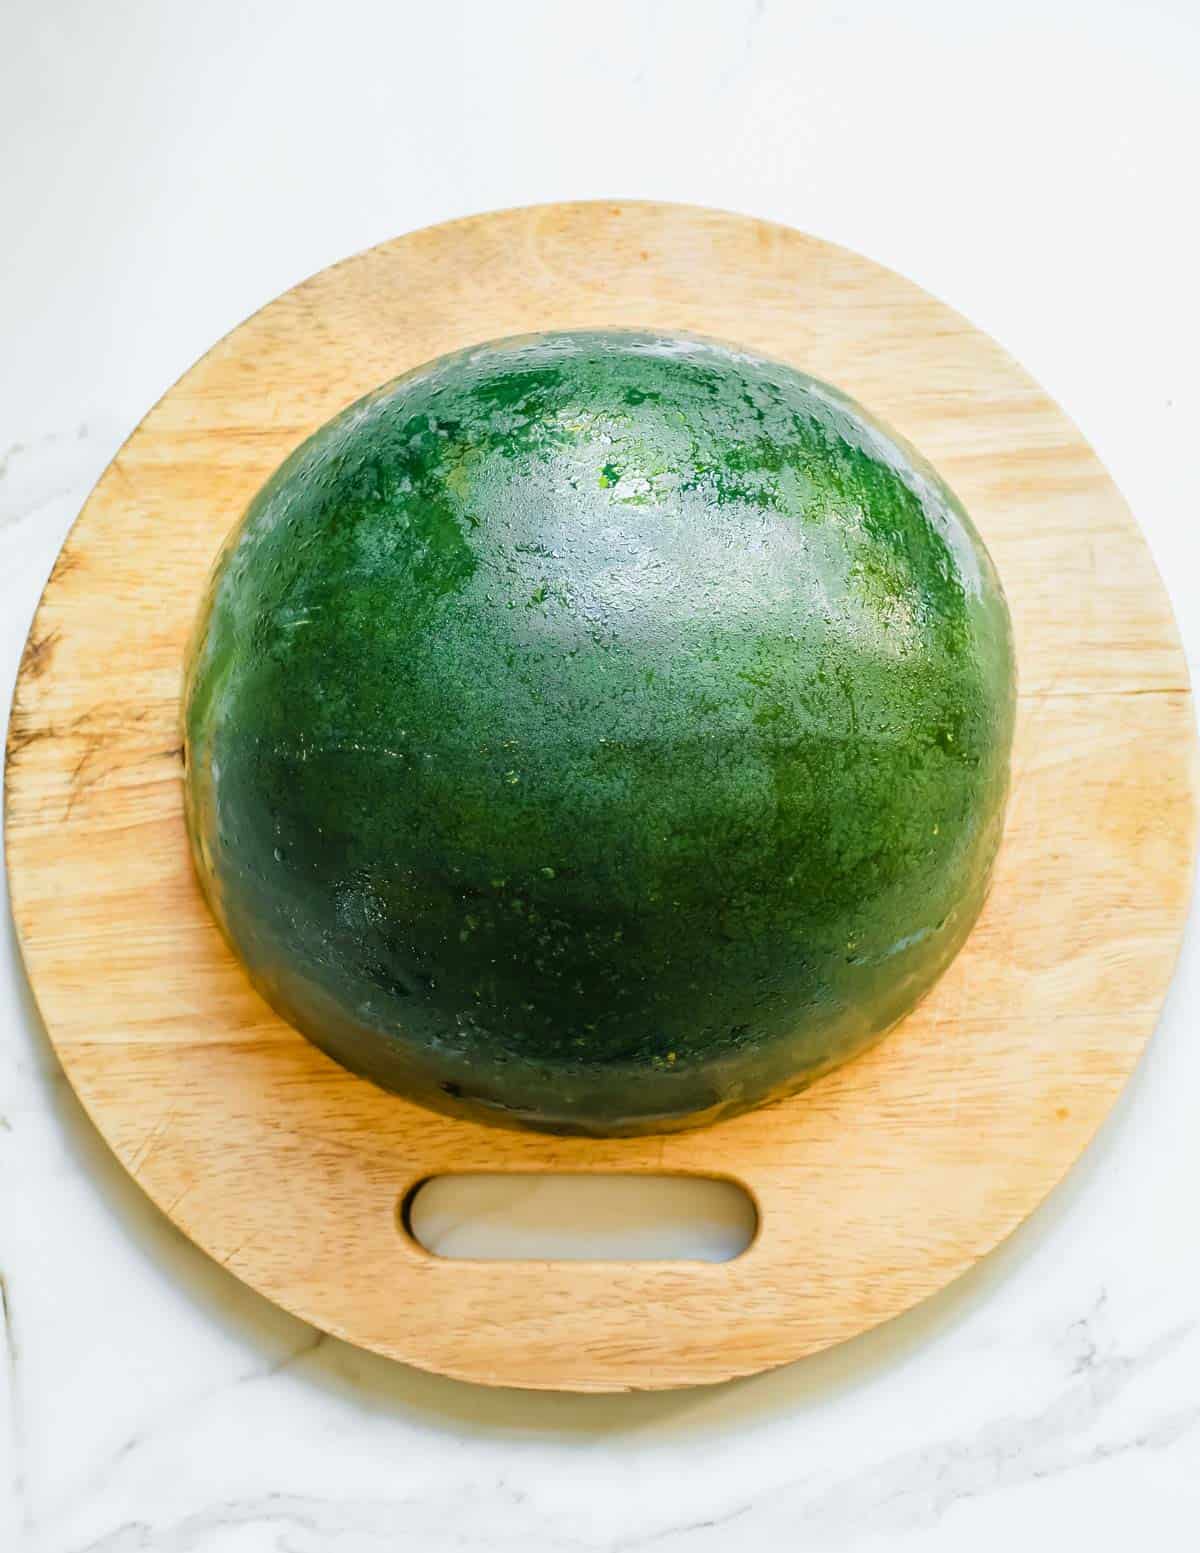 Watermelon cut in half face down on a cutting board.